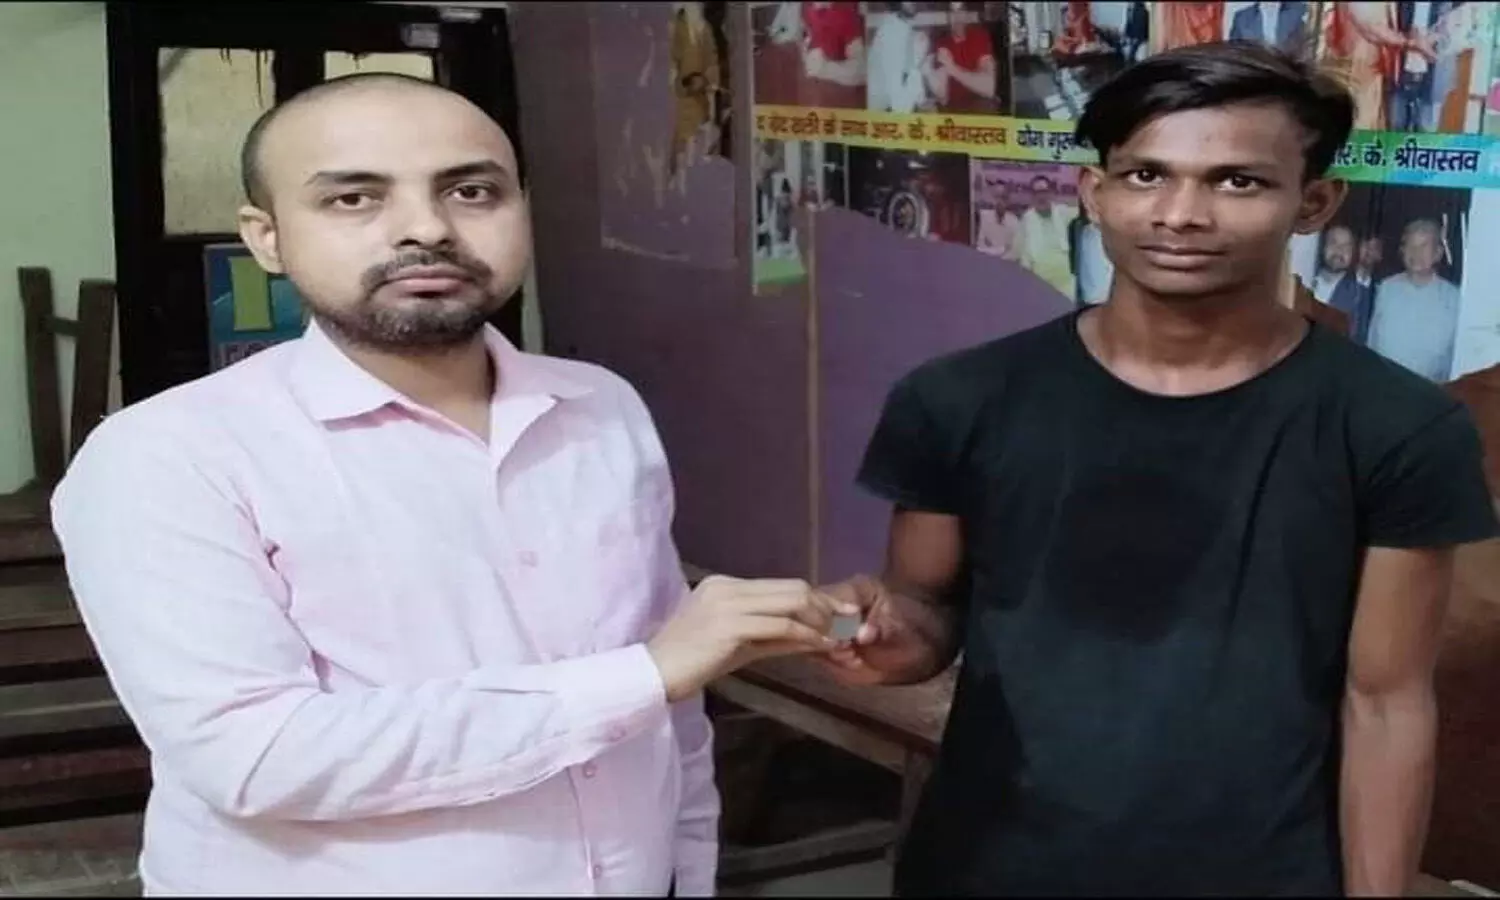 Mathematics Guru RK Srivastava will teach the son of Local Train Almond Seller in just Rupee 1